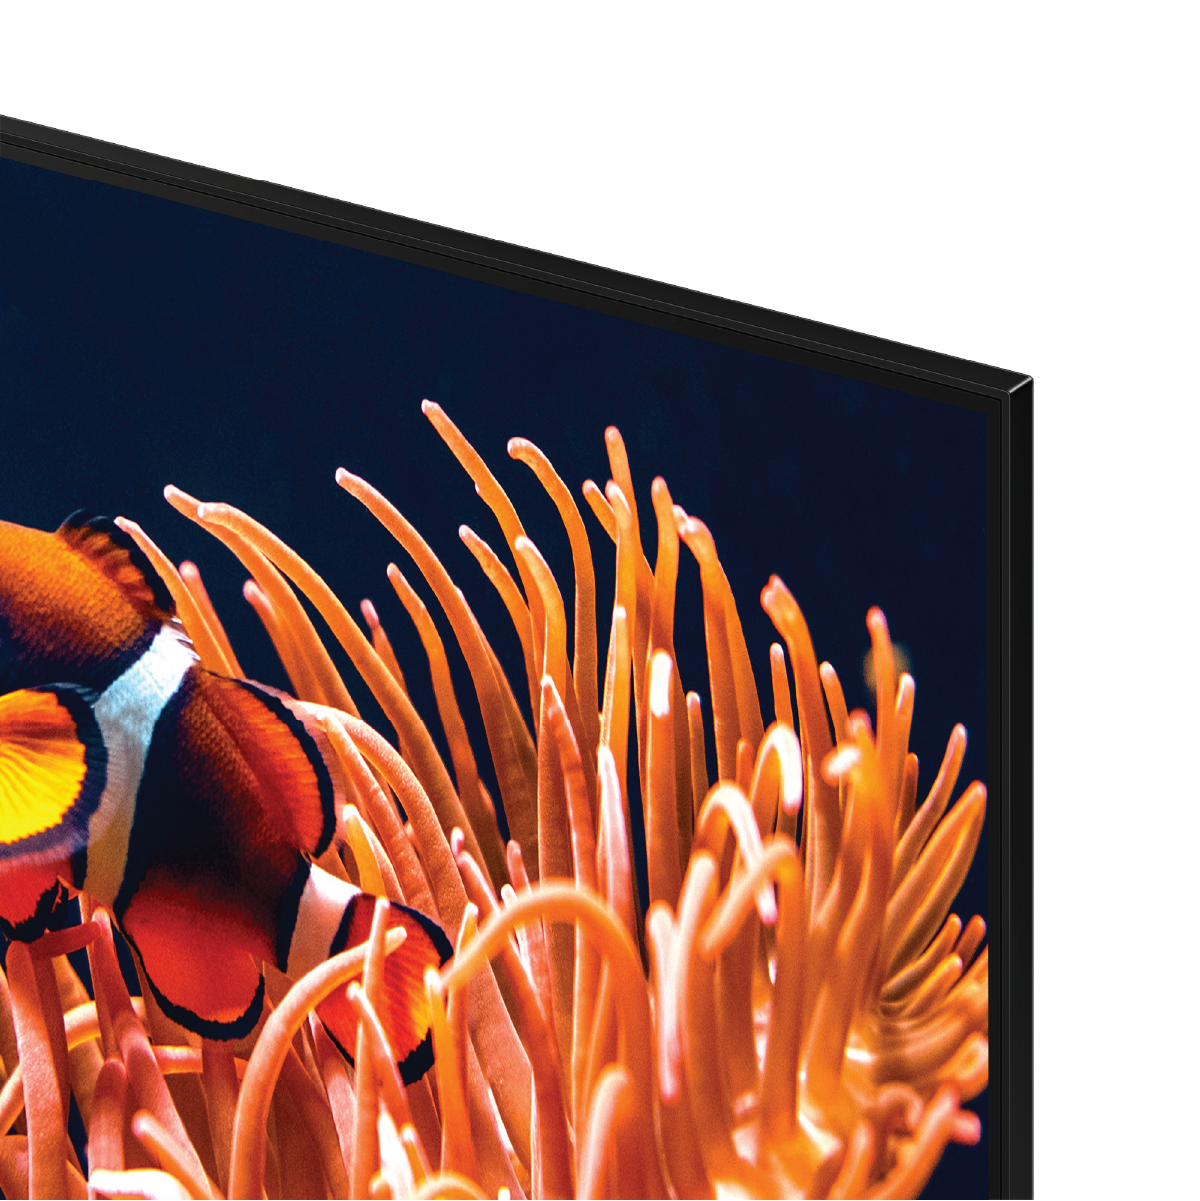 Samsung 55" Class Crystal UHD 4K Smart TV DU8000 (2024) - UN55DU8000FXZA